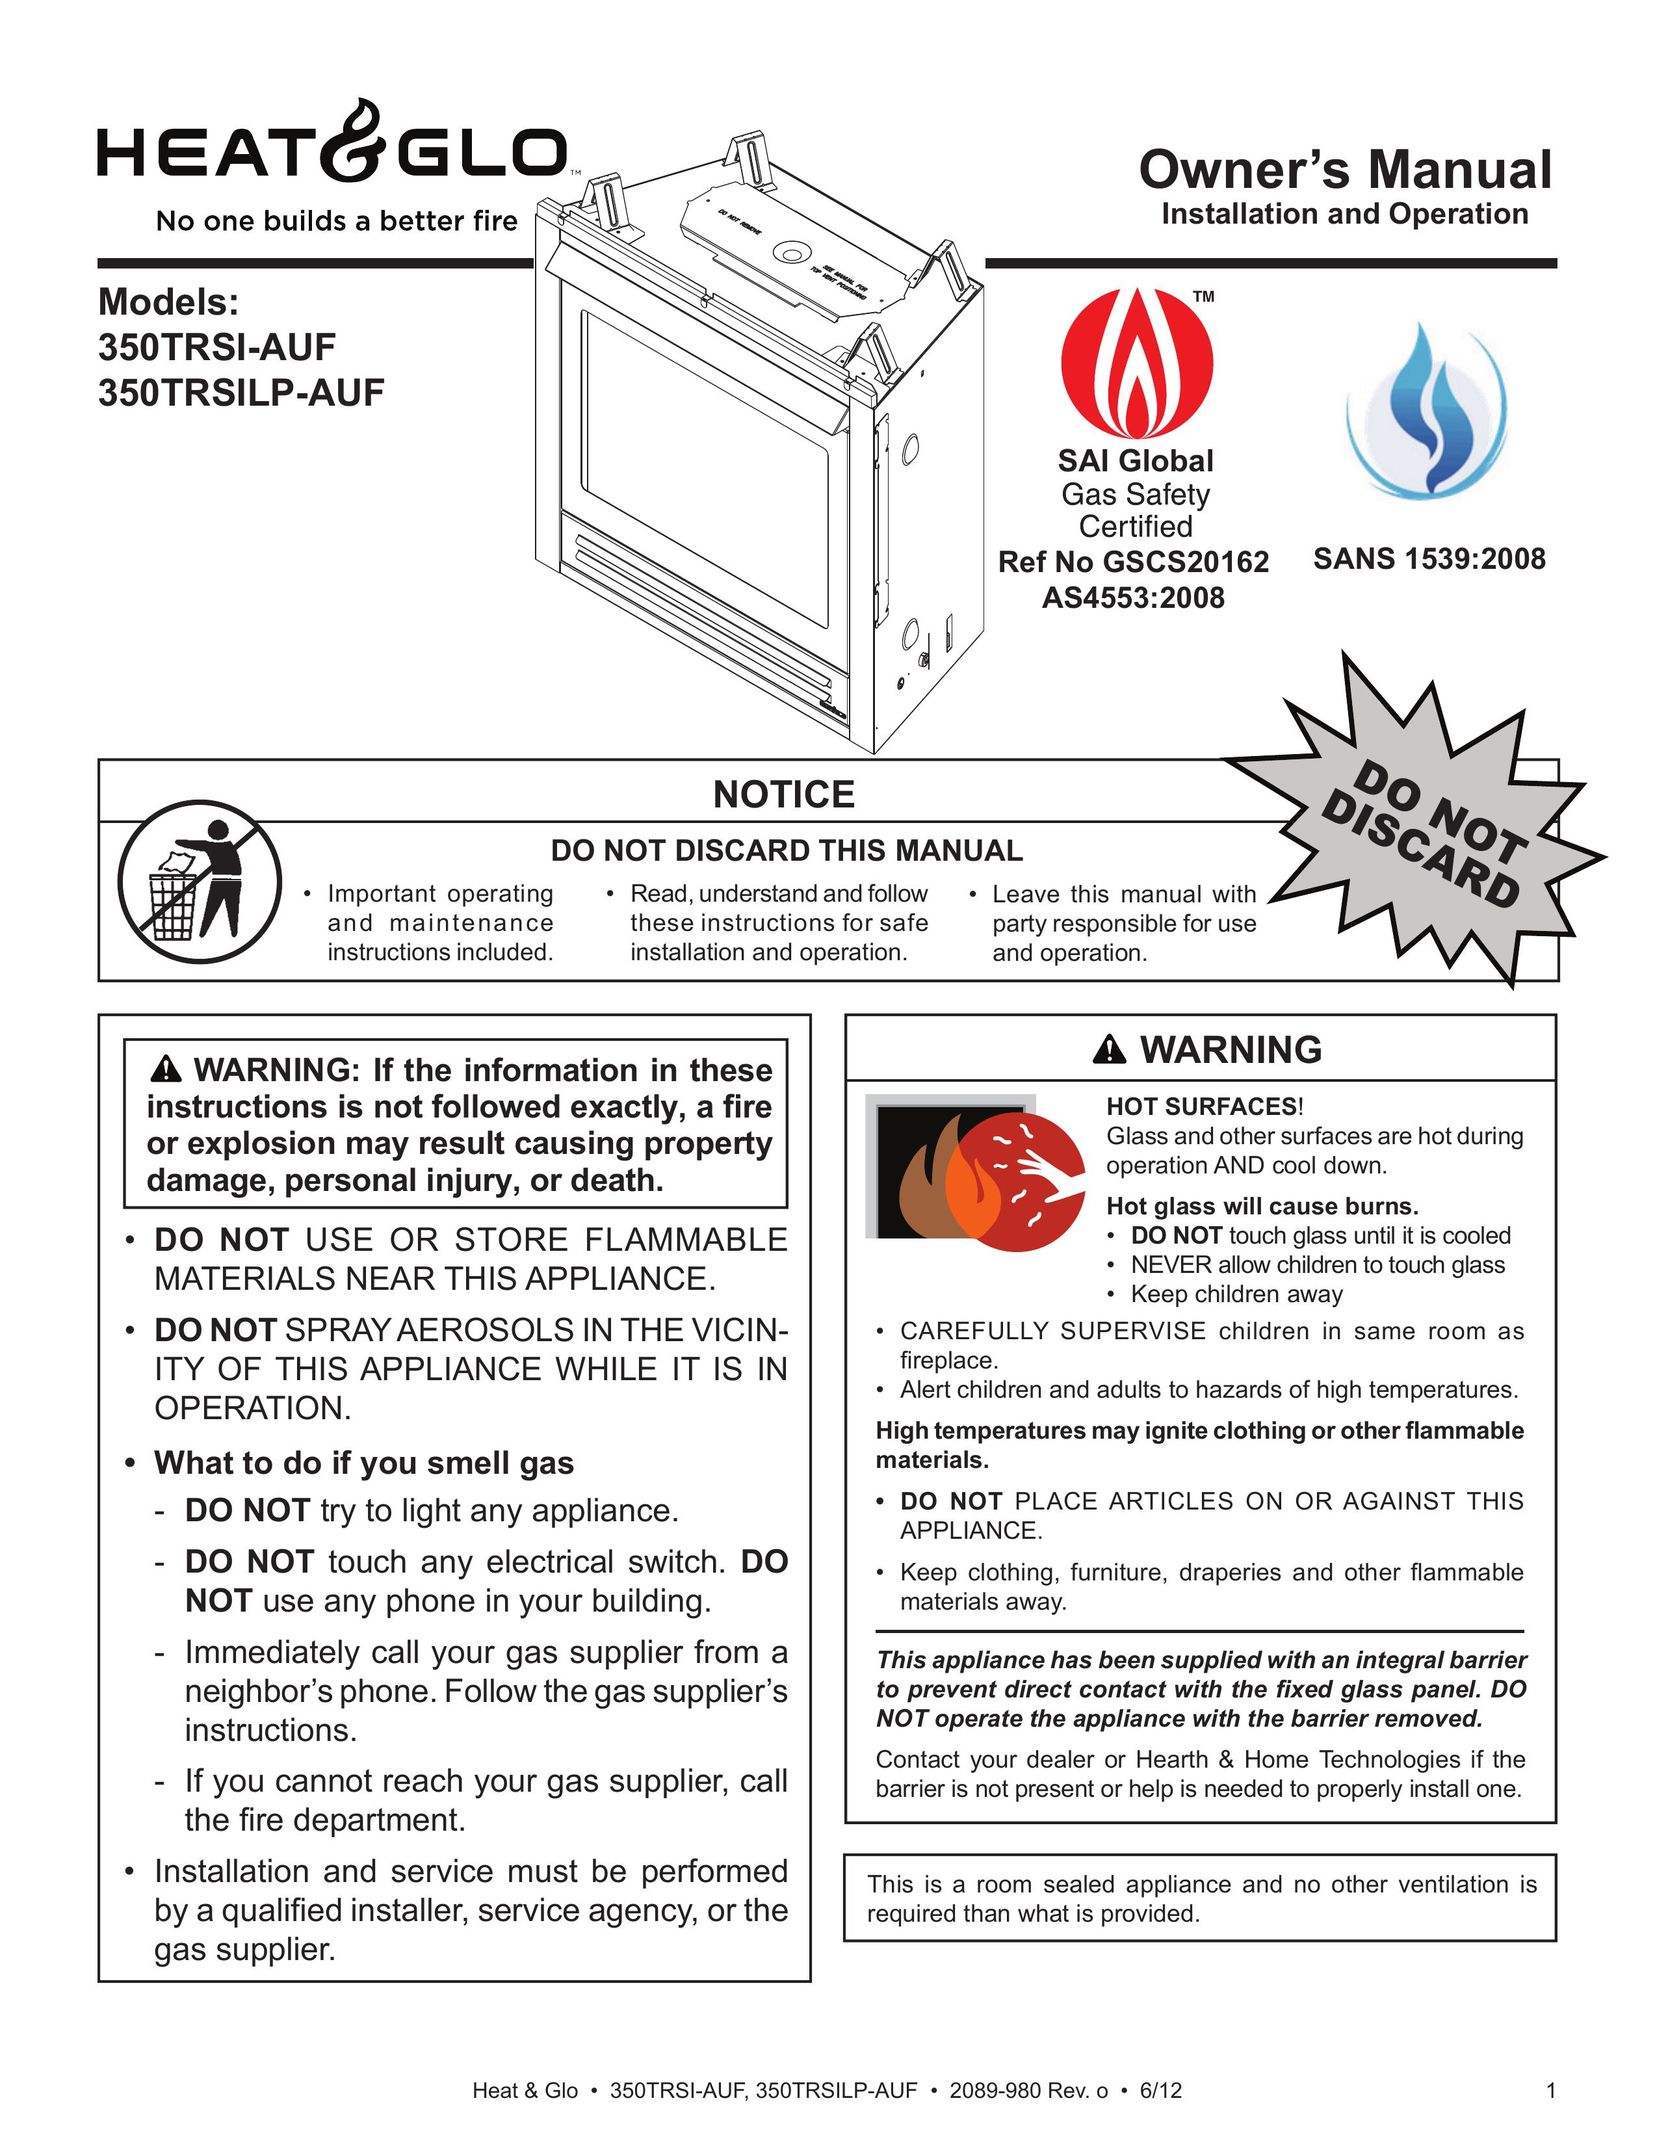 Heat & Glo LifeStyle 350TRSI-AUF Gas Heater User Manual